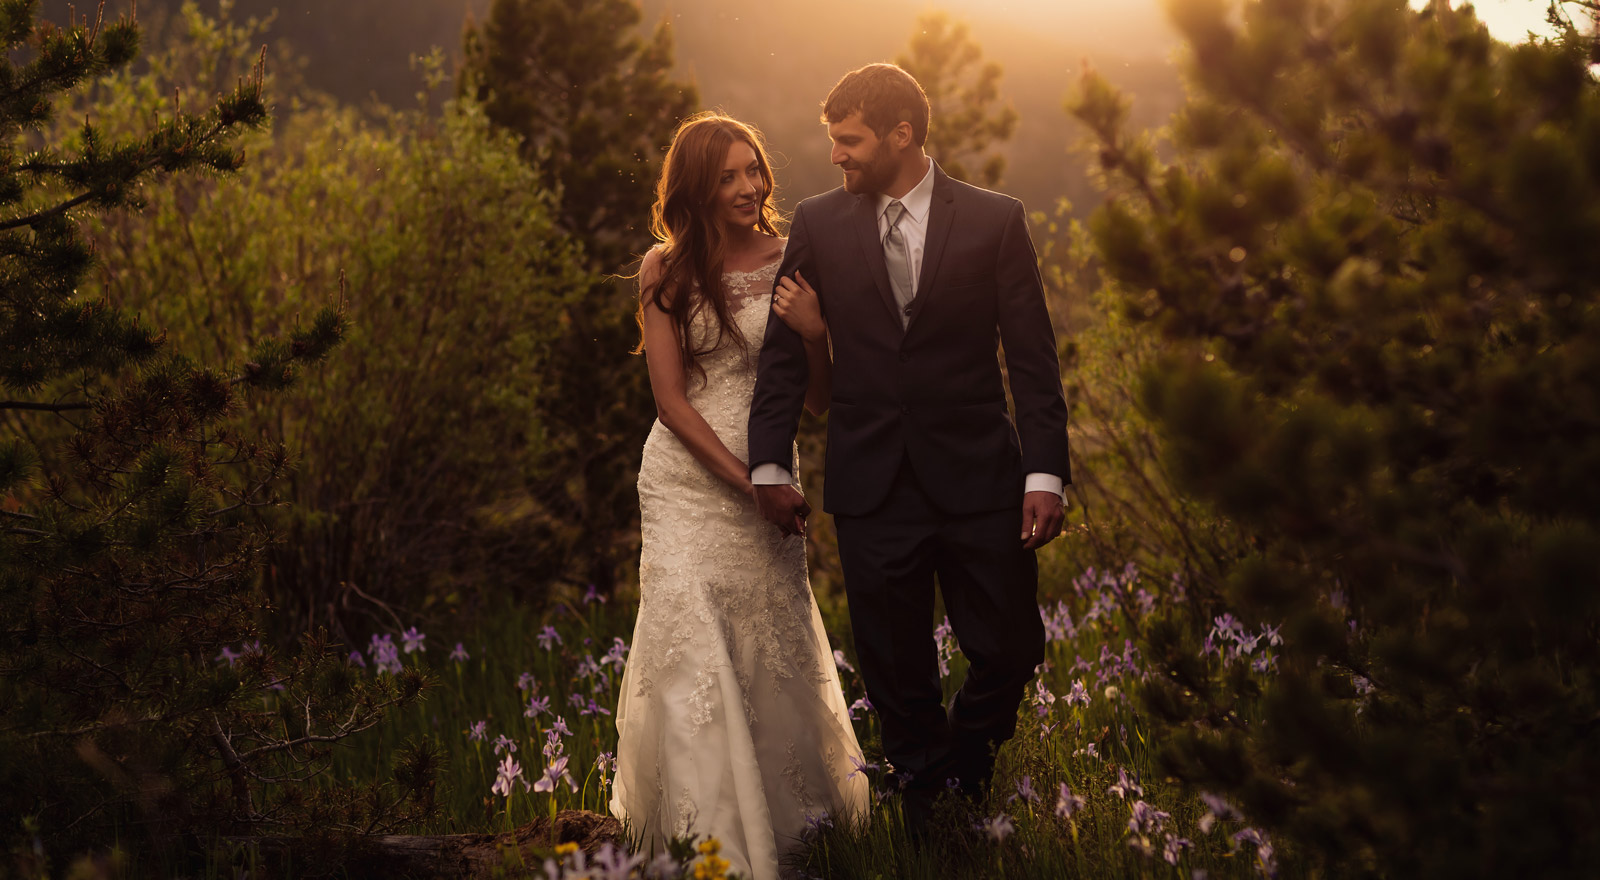 colorado mountain elopement wedding at sunset